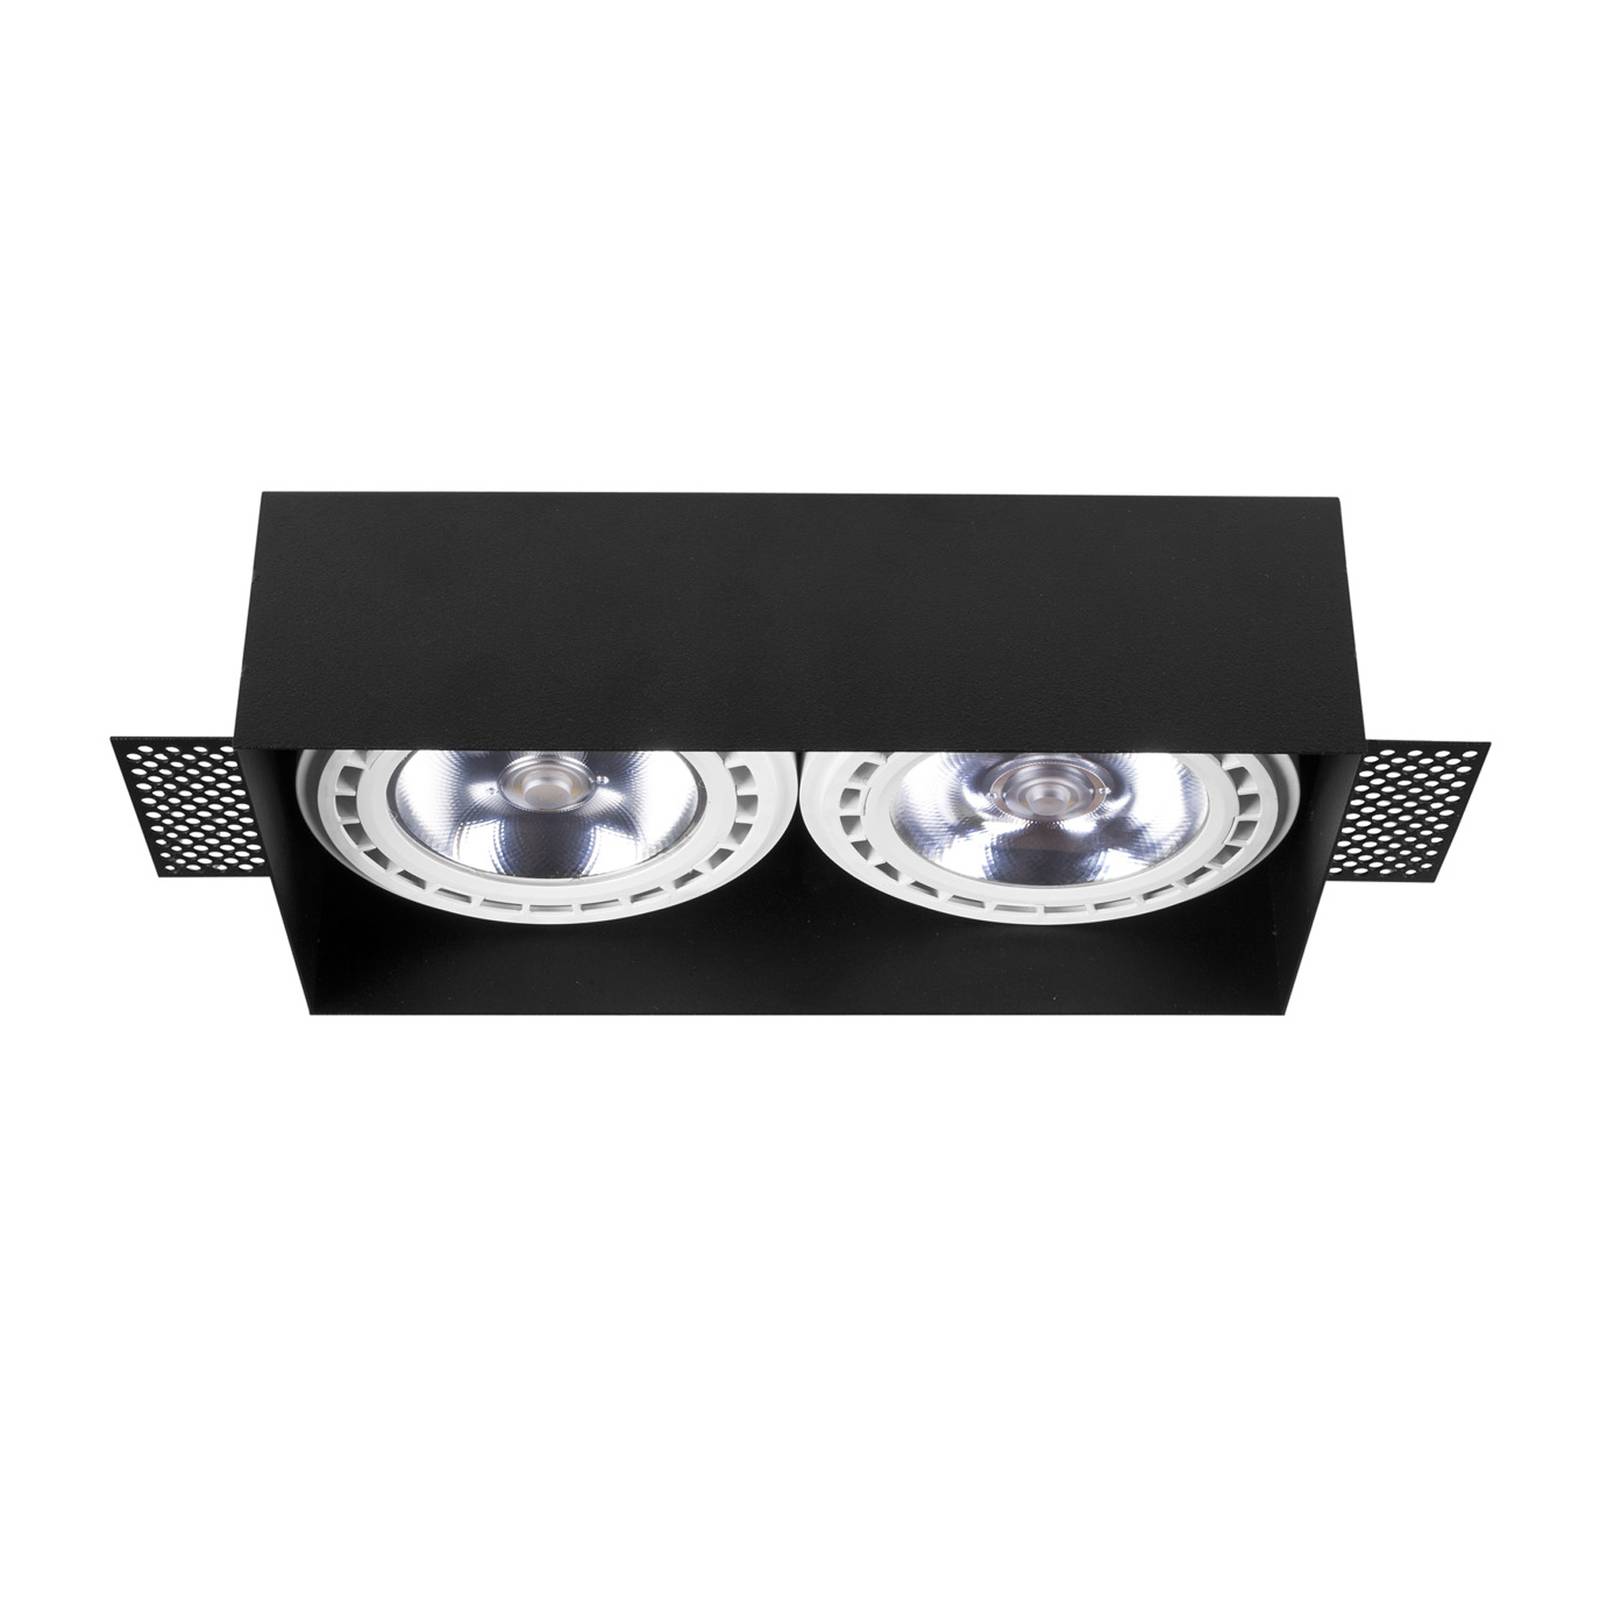 Innfelt spotlight Mod Plus II 2 lyskilder svart